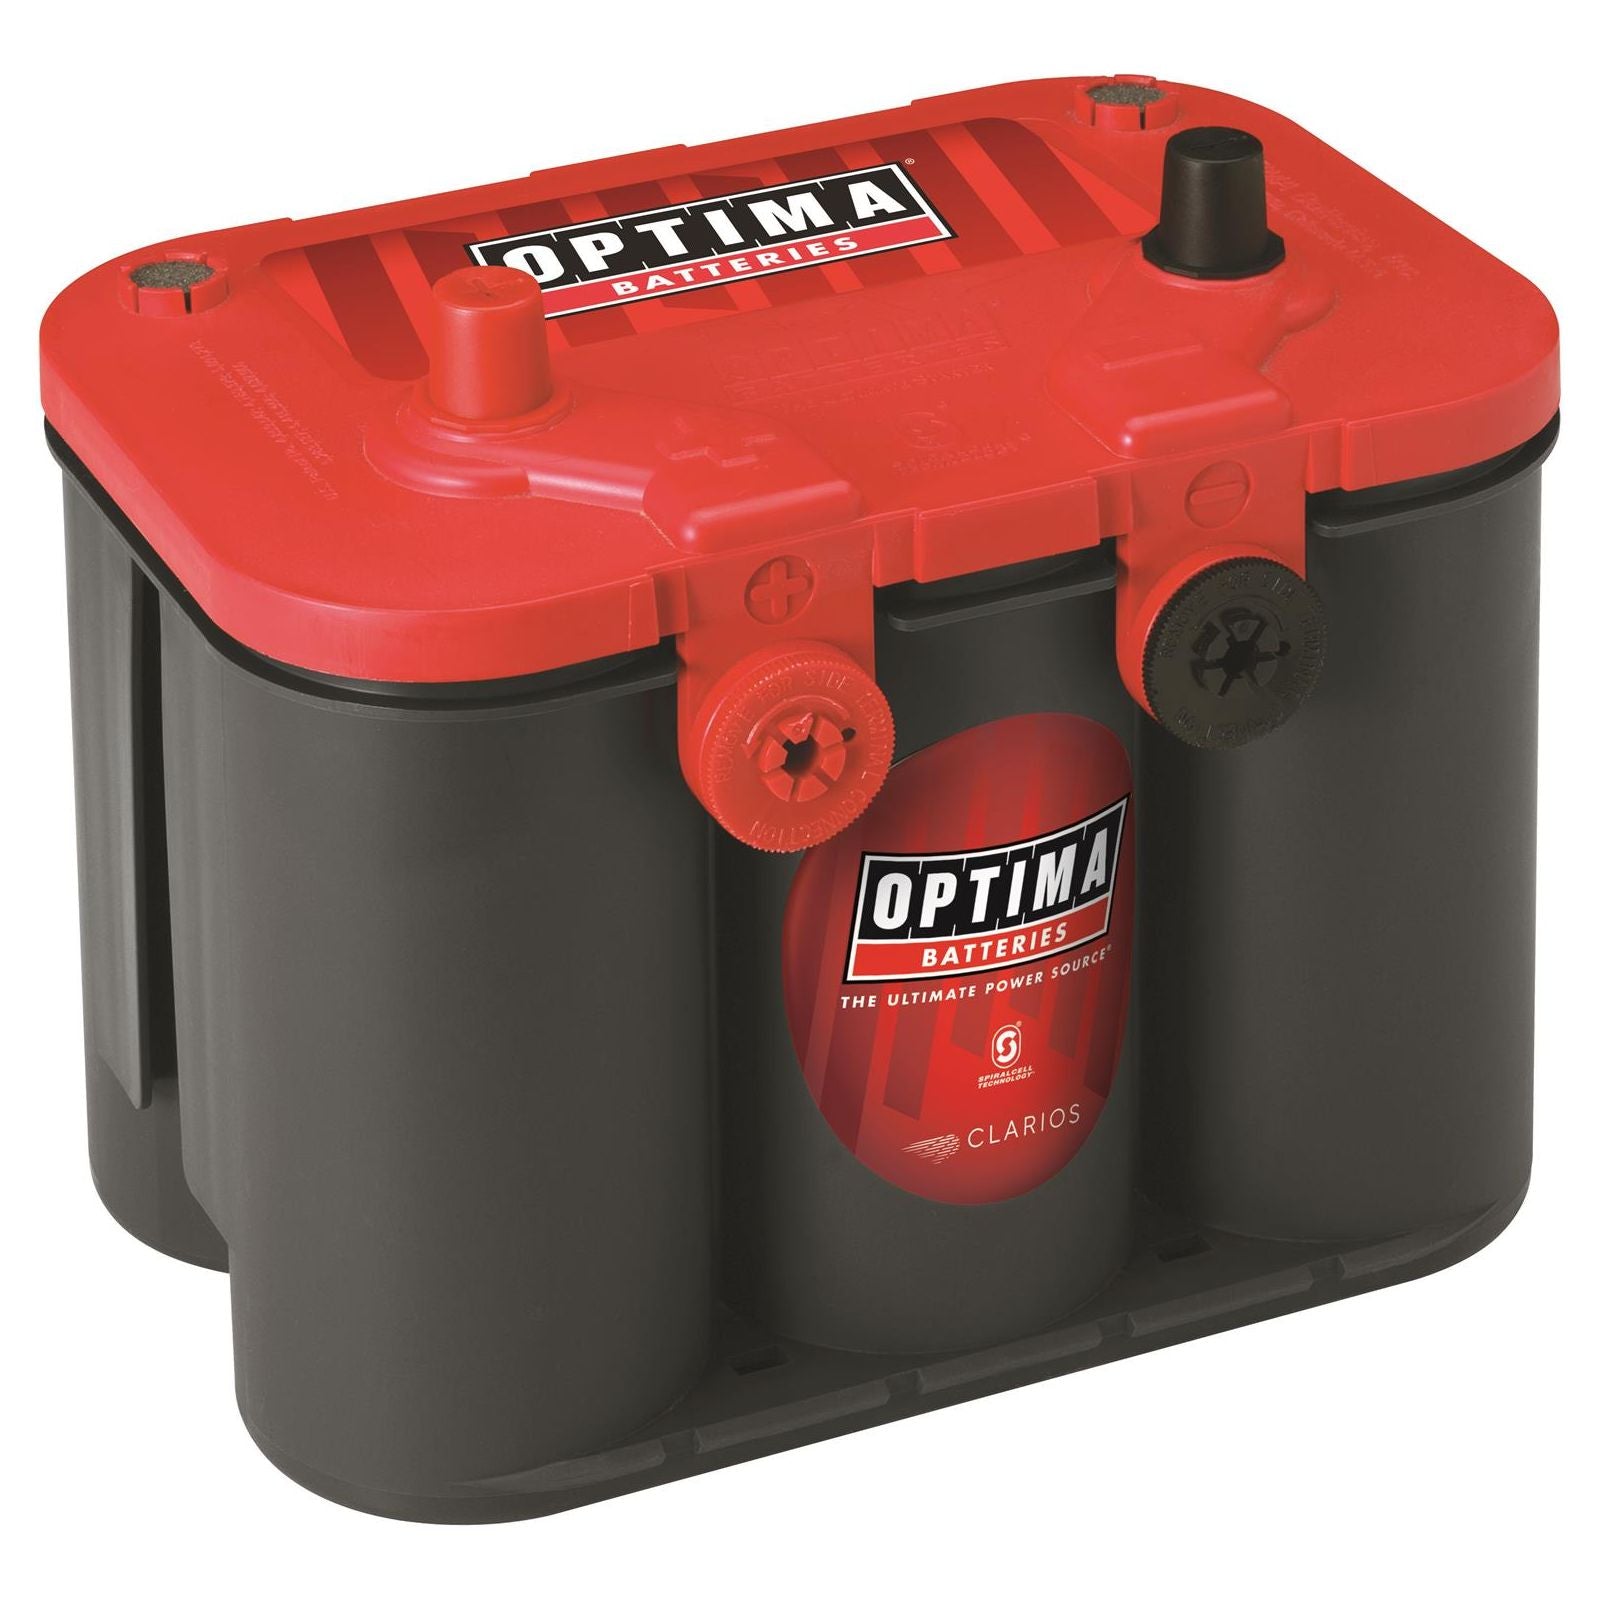 Optima RedTop Starting 12-Volt Batteries 9004-003